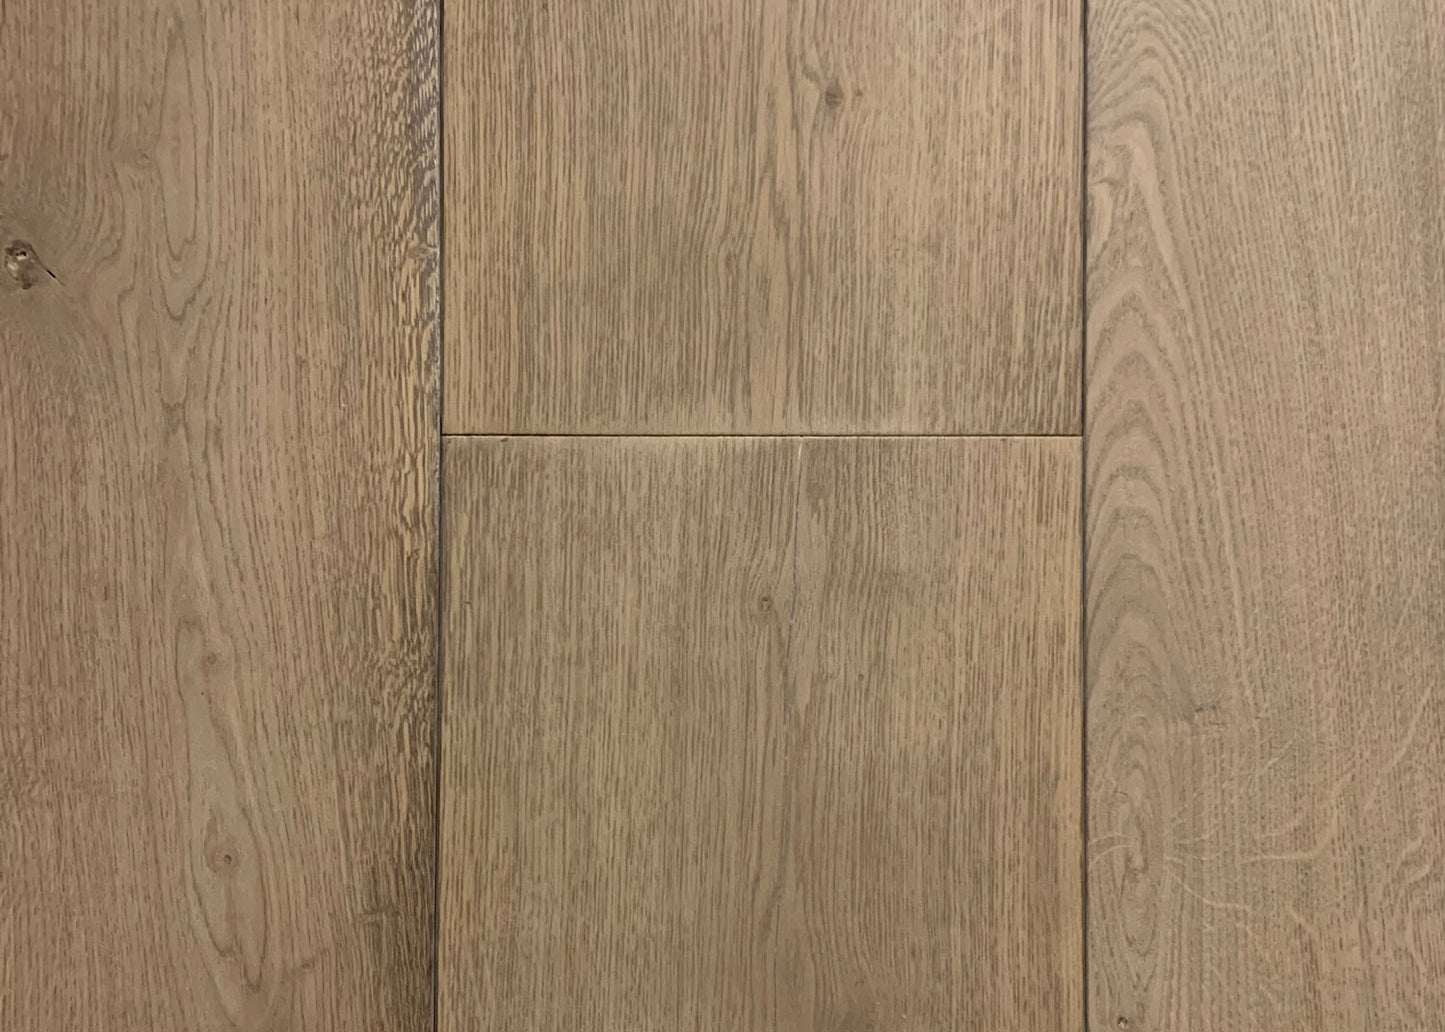 Driftwood Nordic Oak Flooring | Engineered Oak Wood Floor